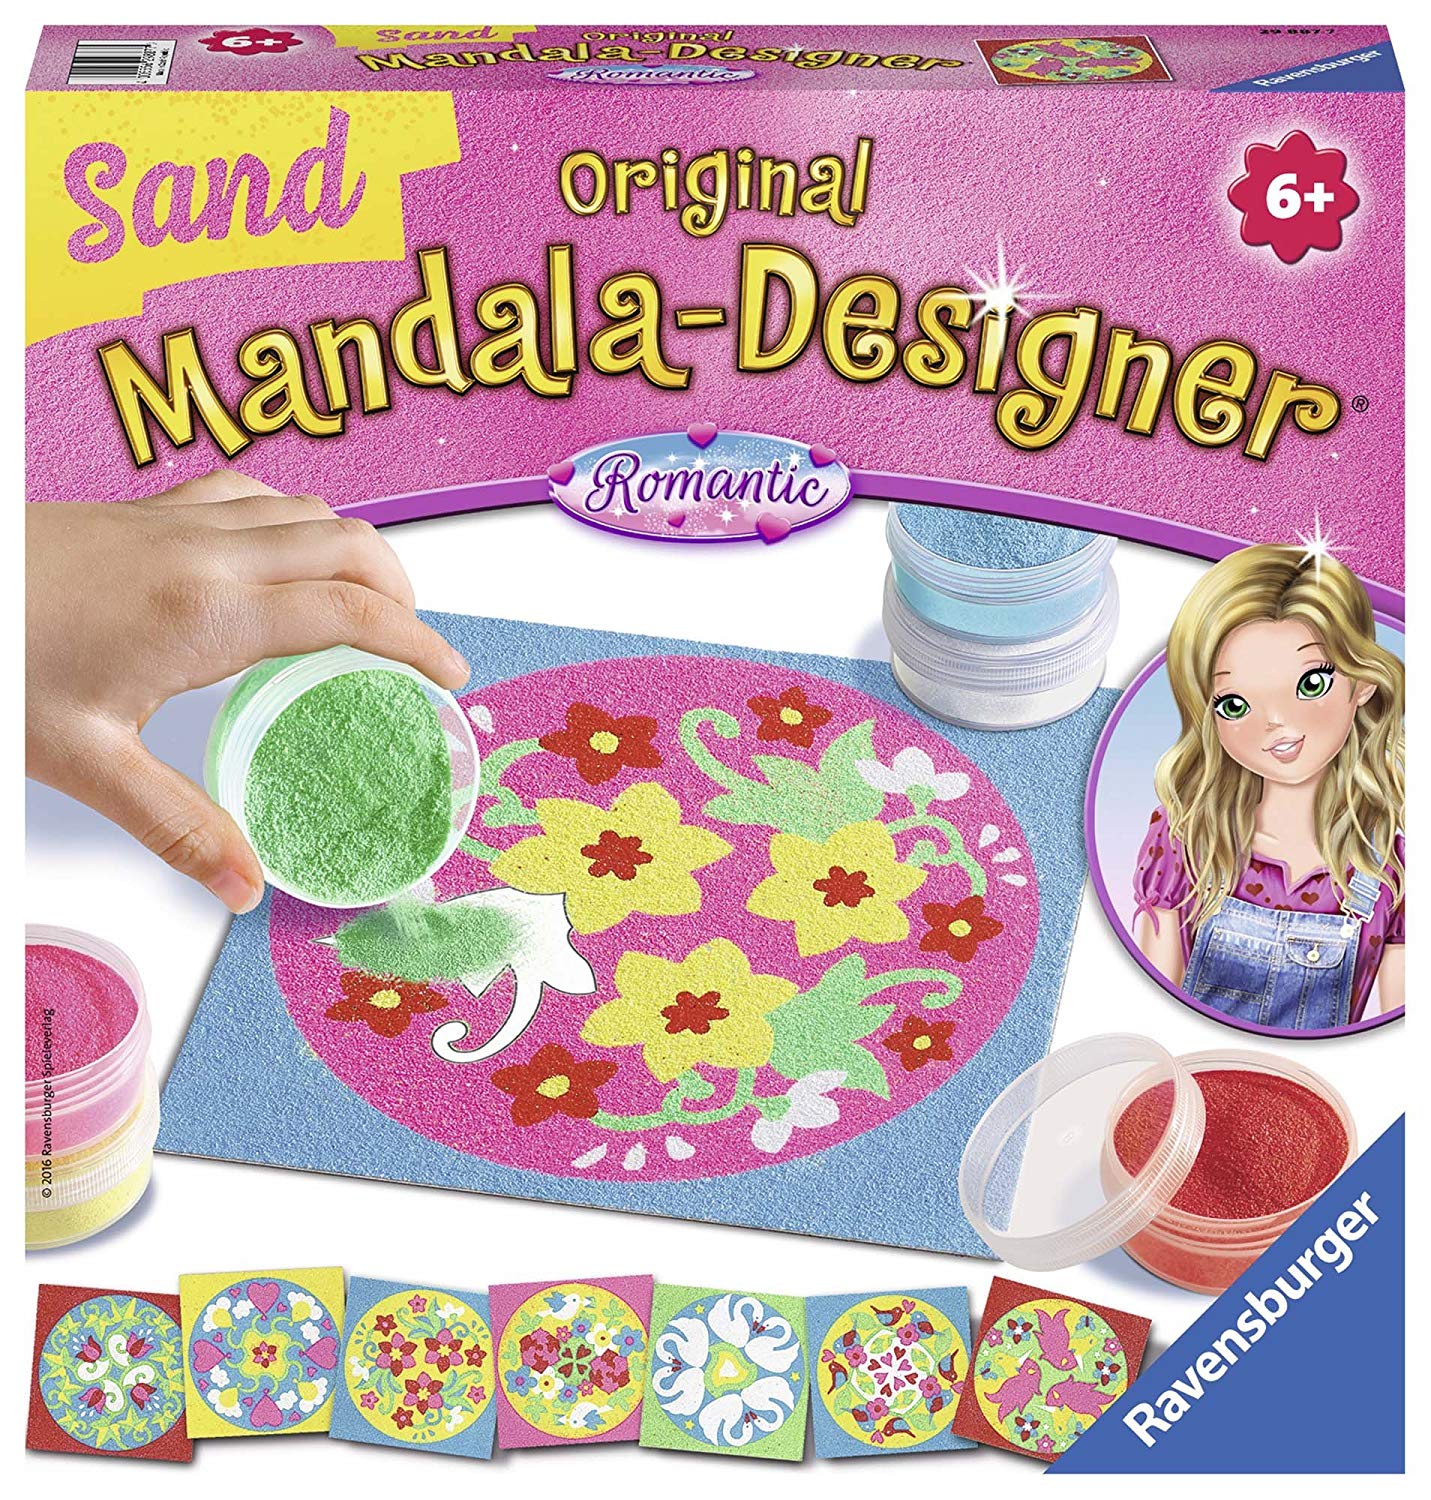 Original Mandala Designer Romantic Sand